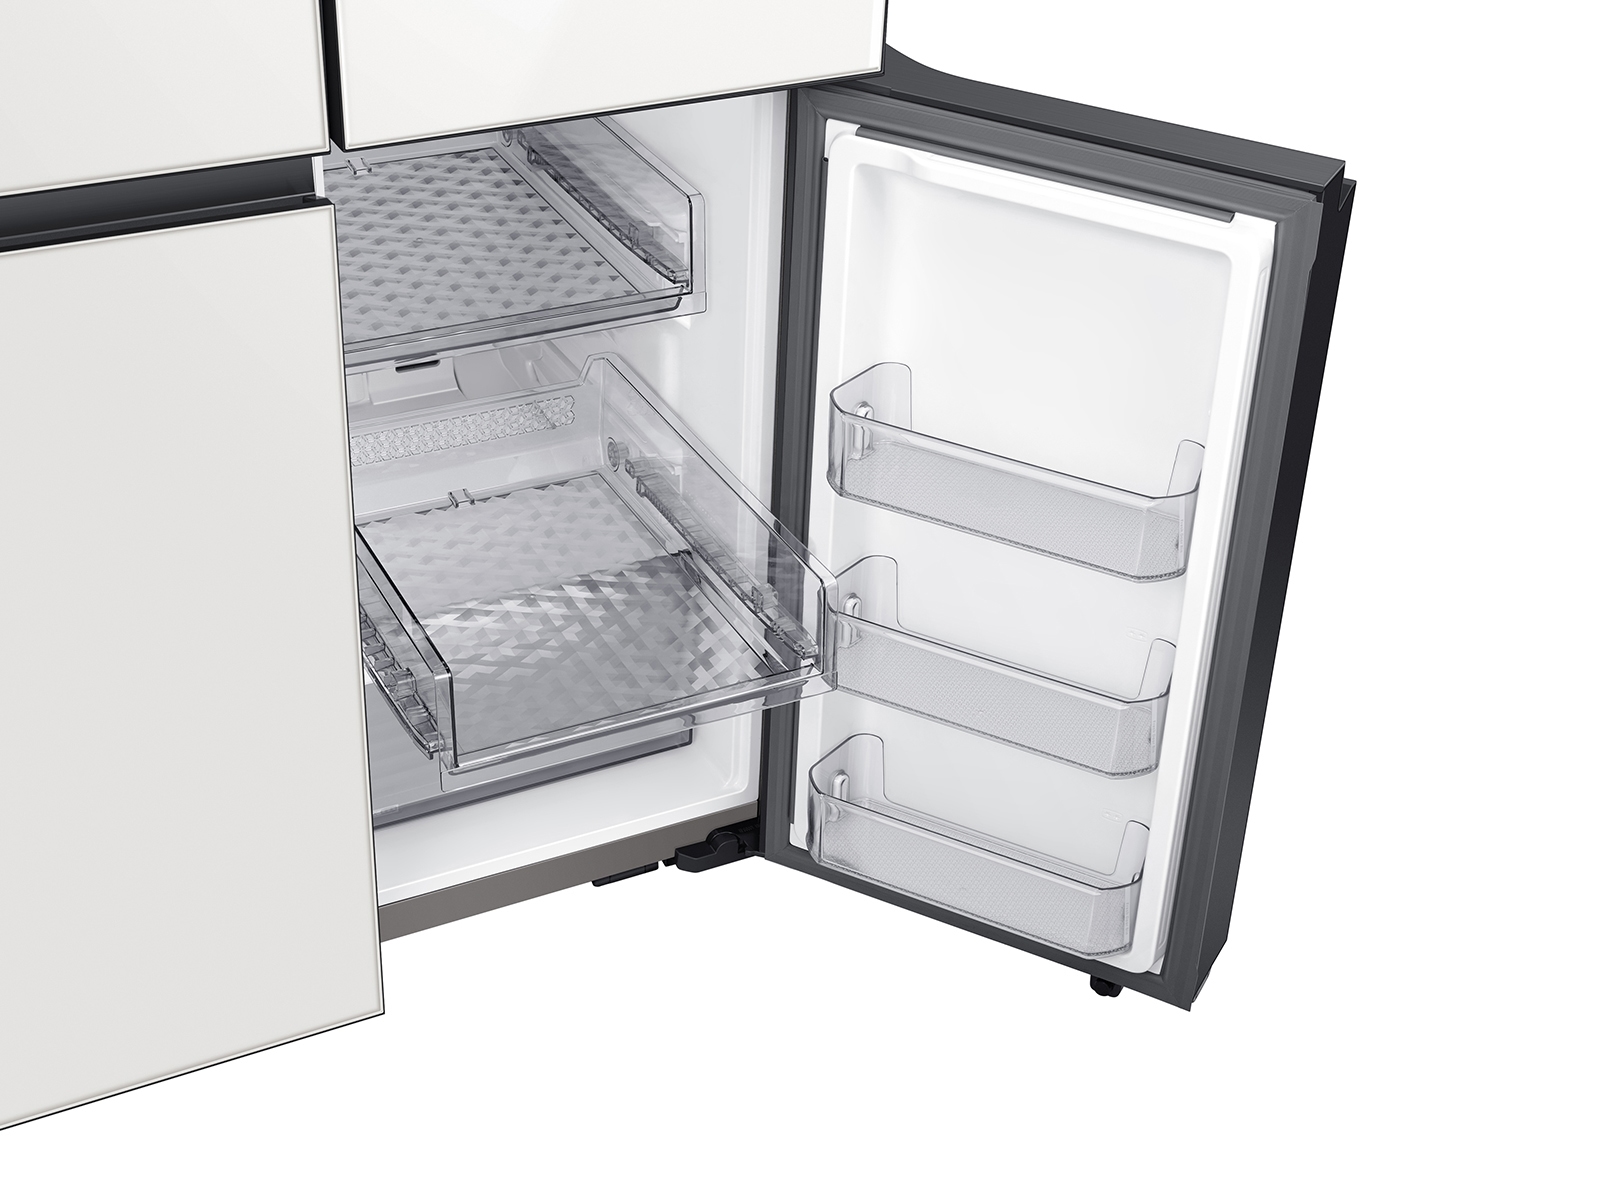 Thumbnail image of Bespoke 4-Door Flex™ Refrigerator (29 cu. ft.) in White Glass